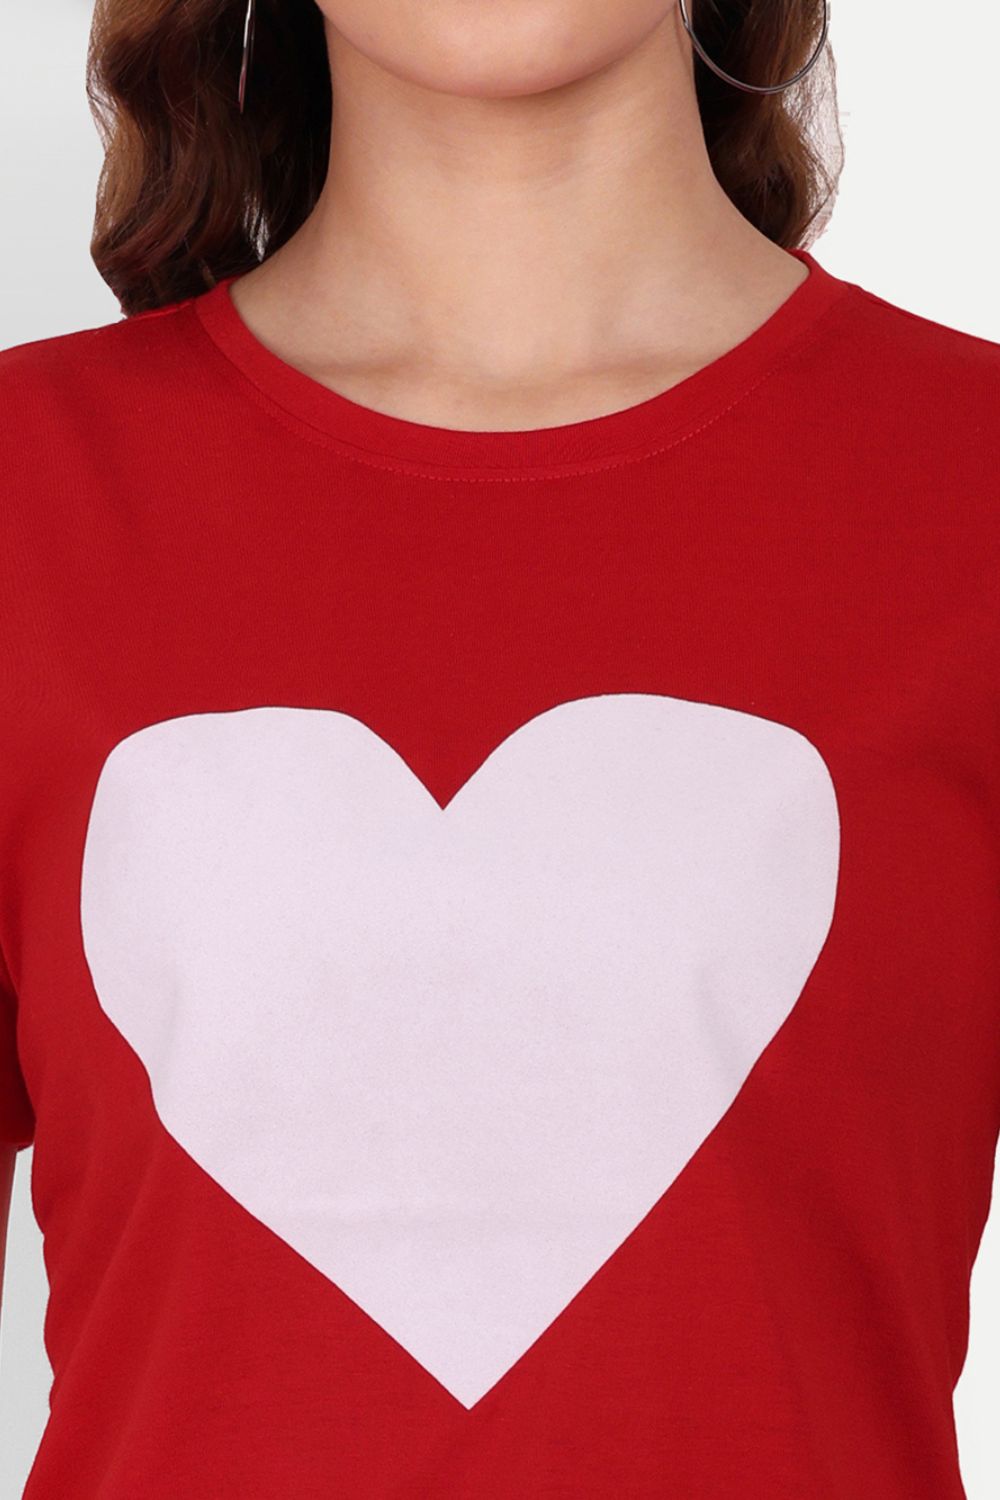 White Heart T-Shirt